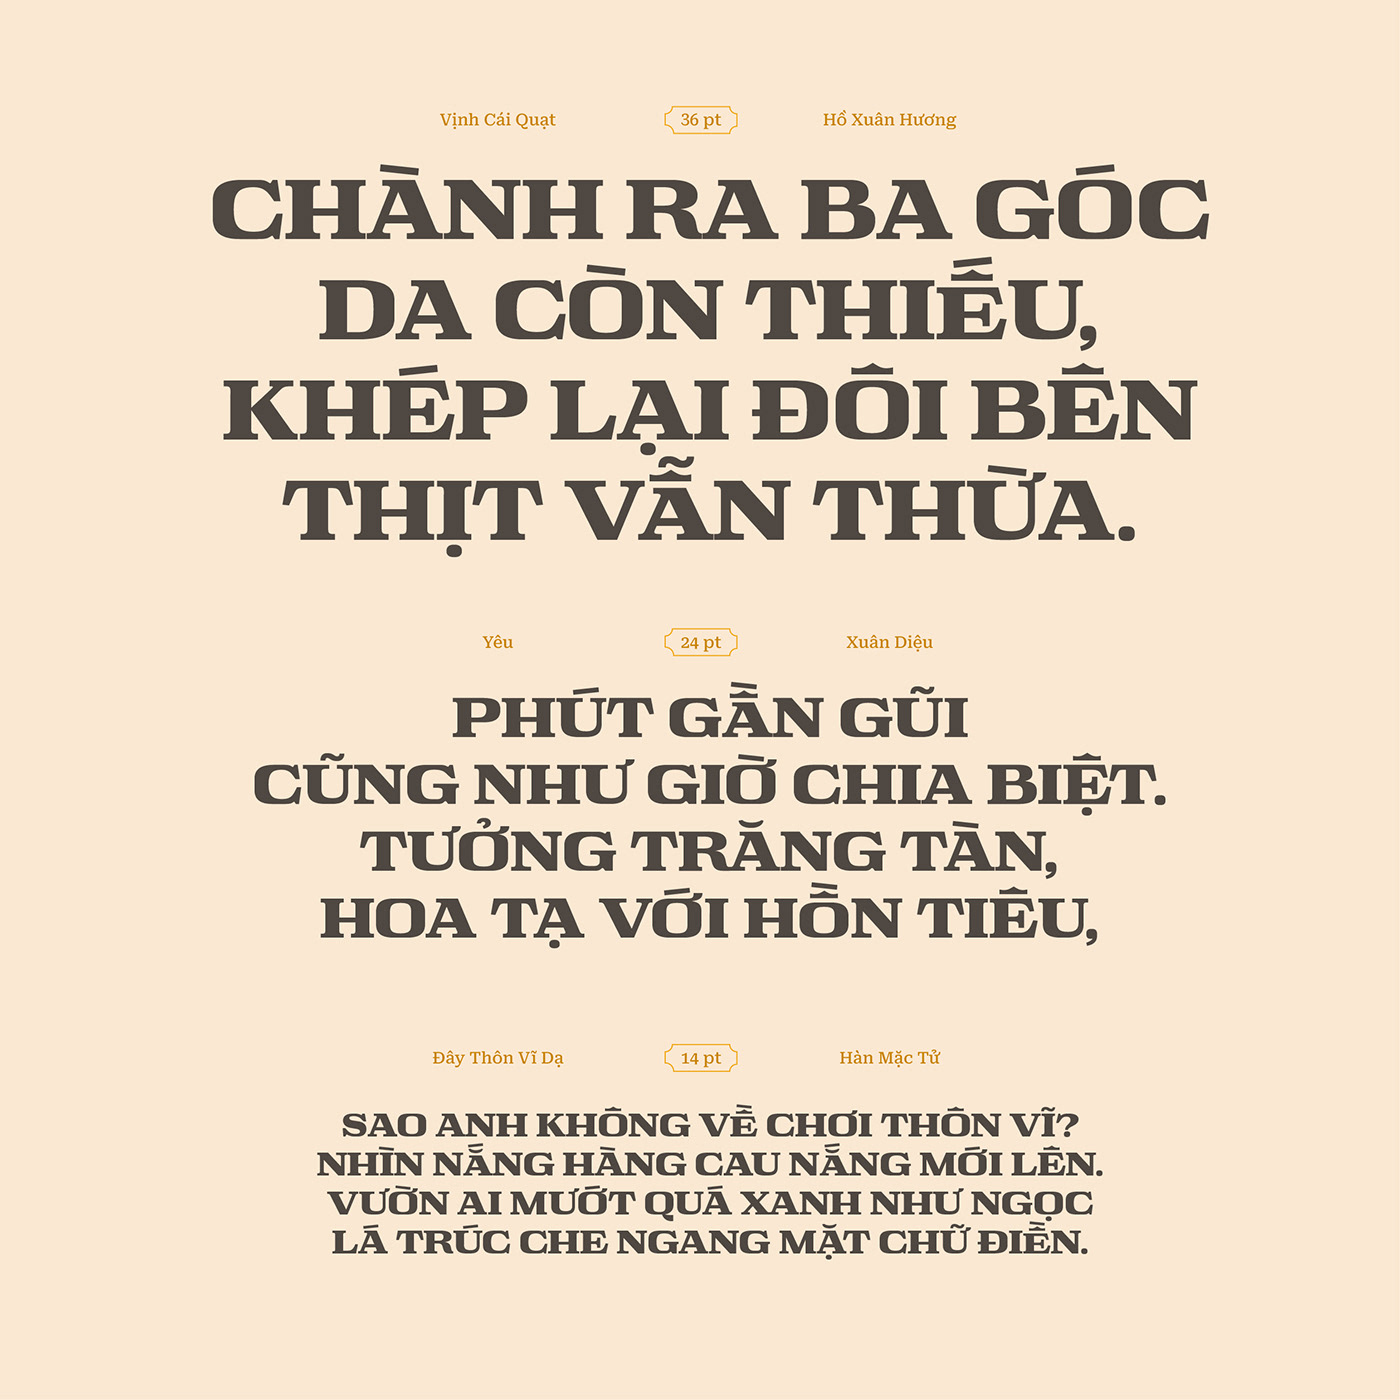 fonts font Typeface type design free vintage Retro vietnam typography   Logotype